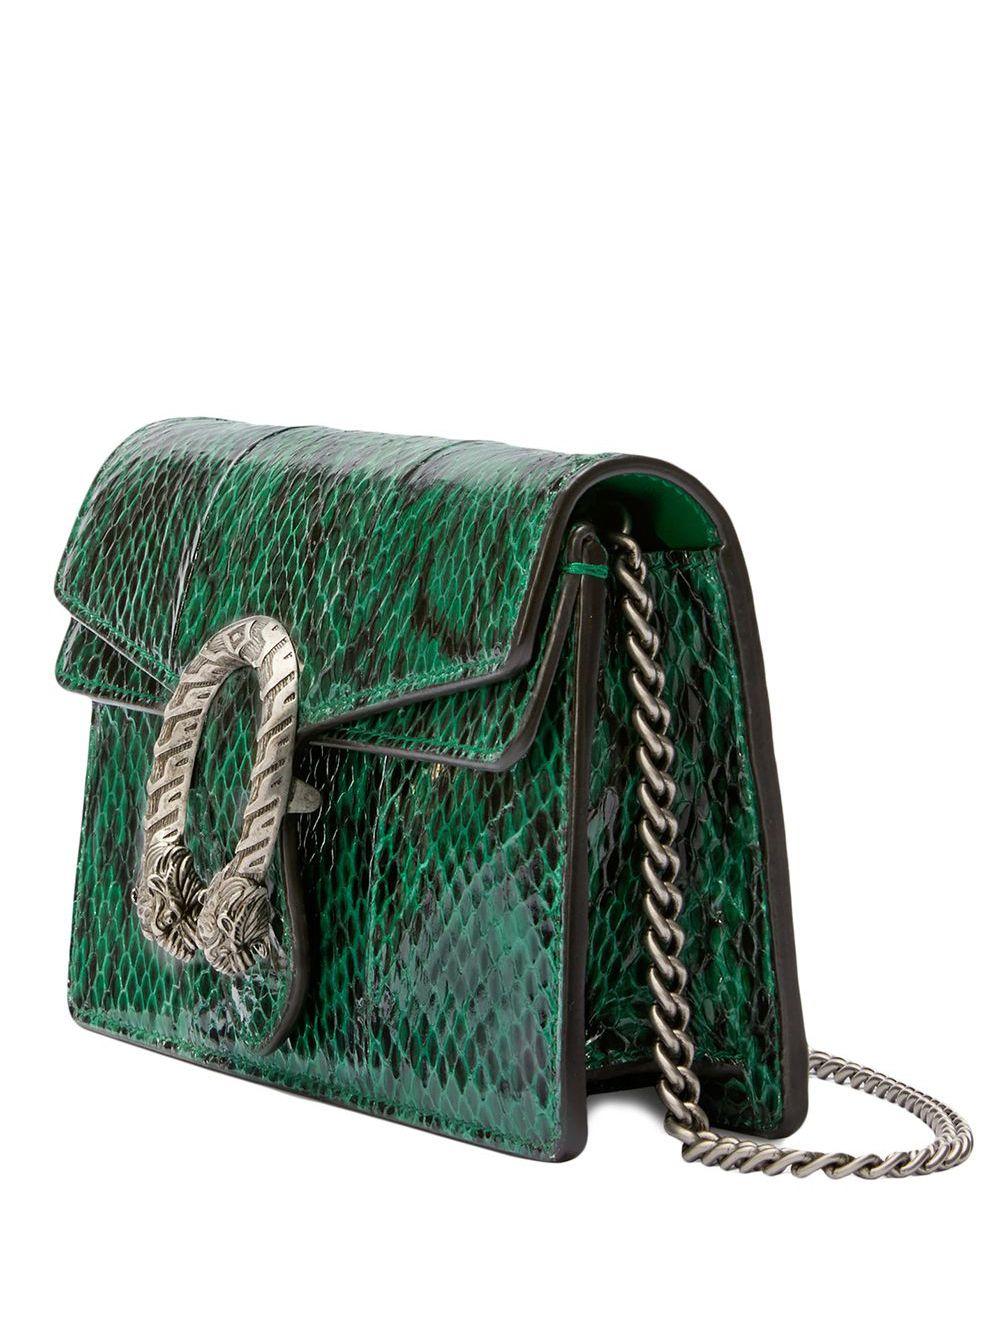 Gucci Dionysus Super Mini Snakeskin Bag in Green | Lyst